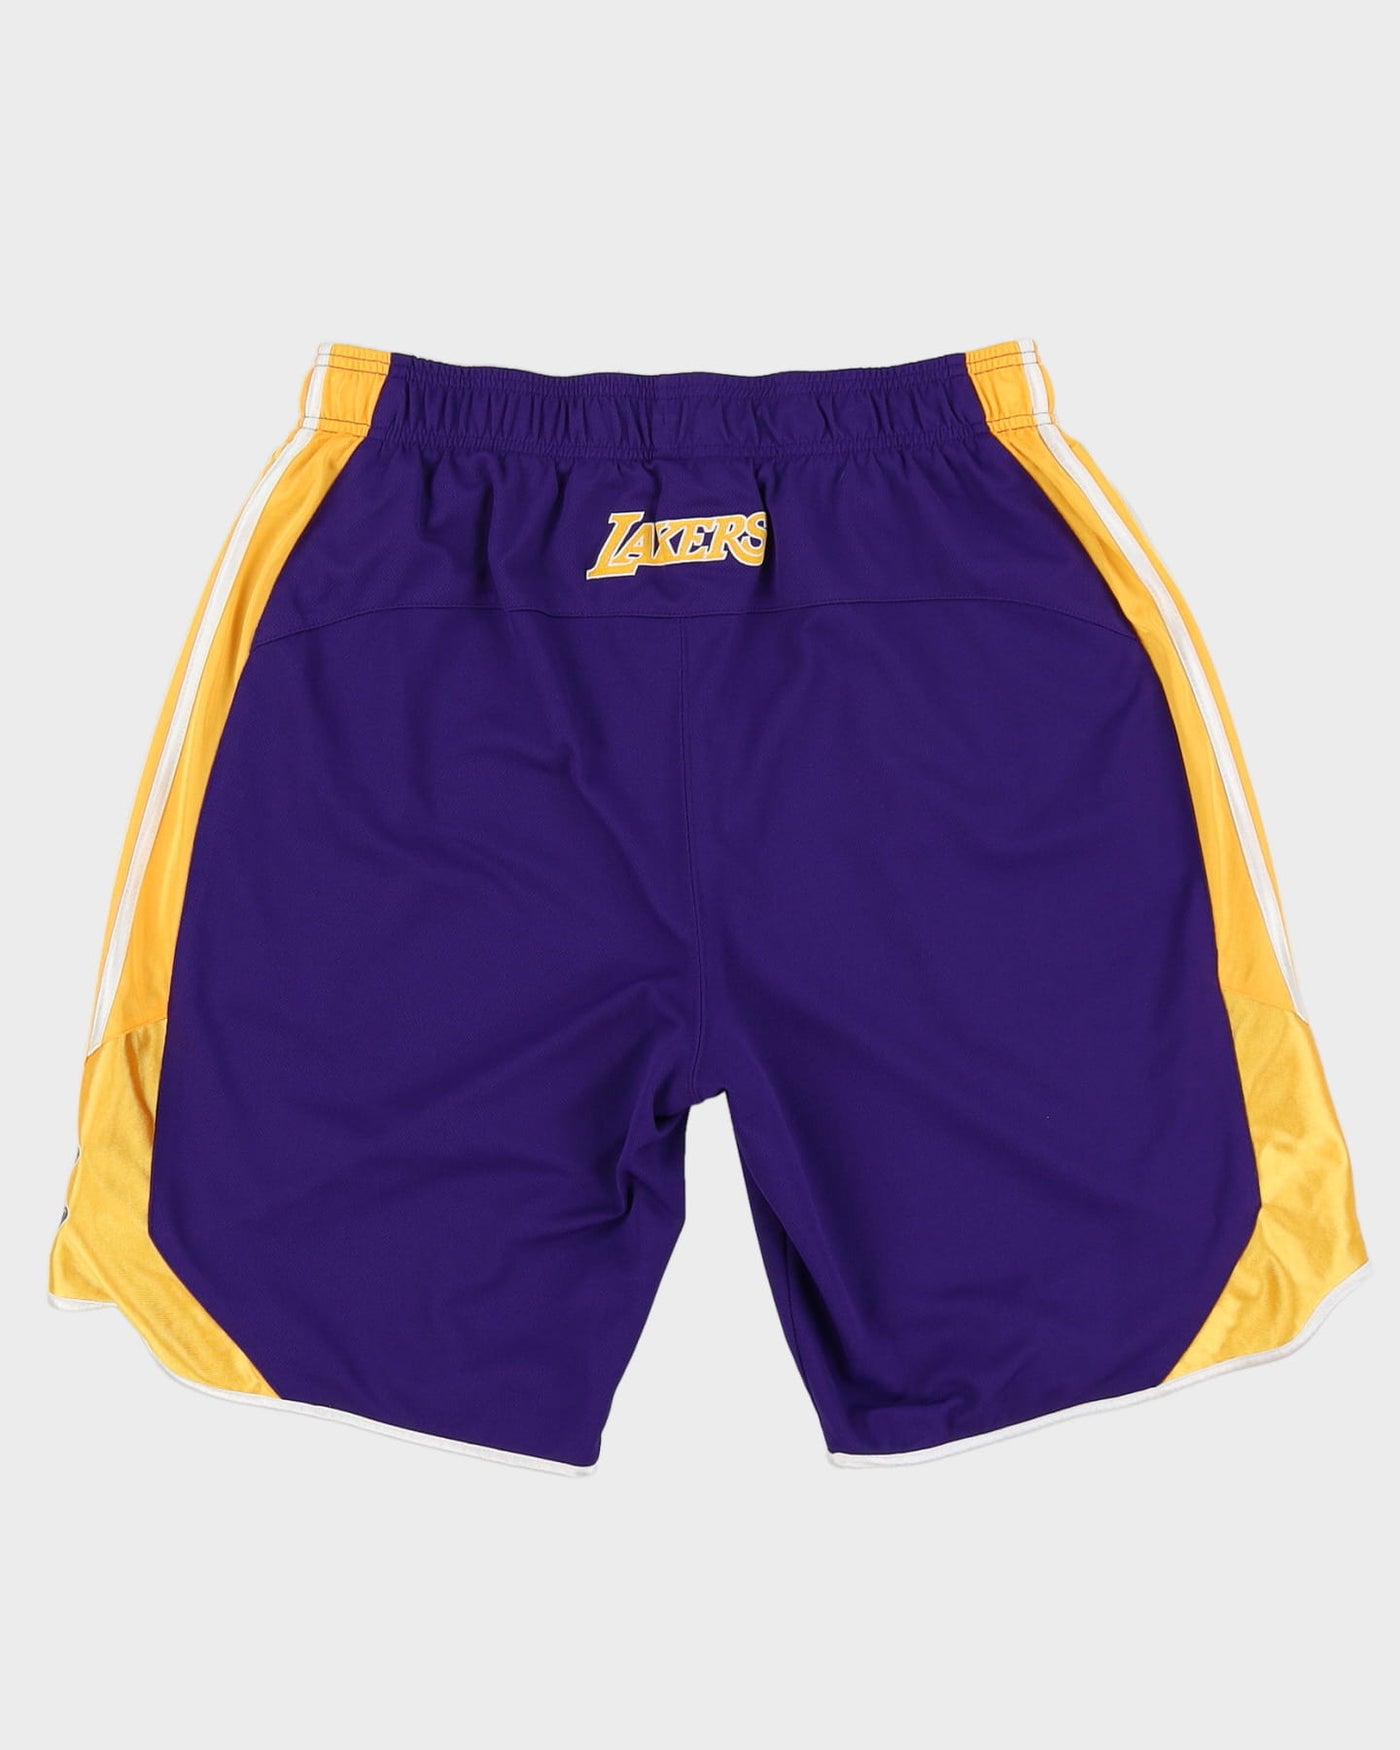 Adidas Los Angeles LA Lakers NBA Purple / Gold Basketball Jersey Shorts - L